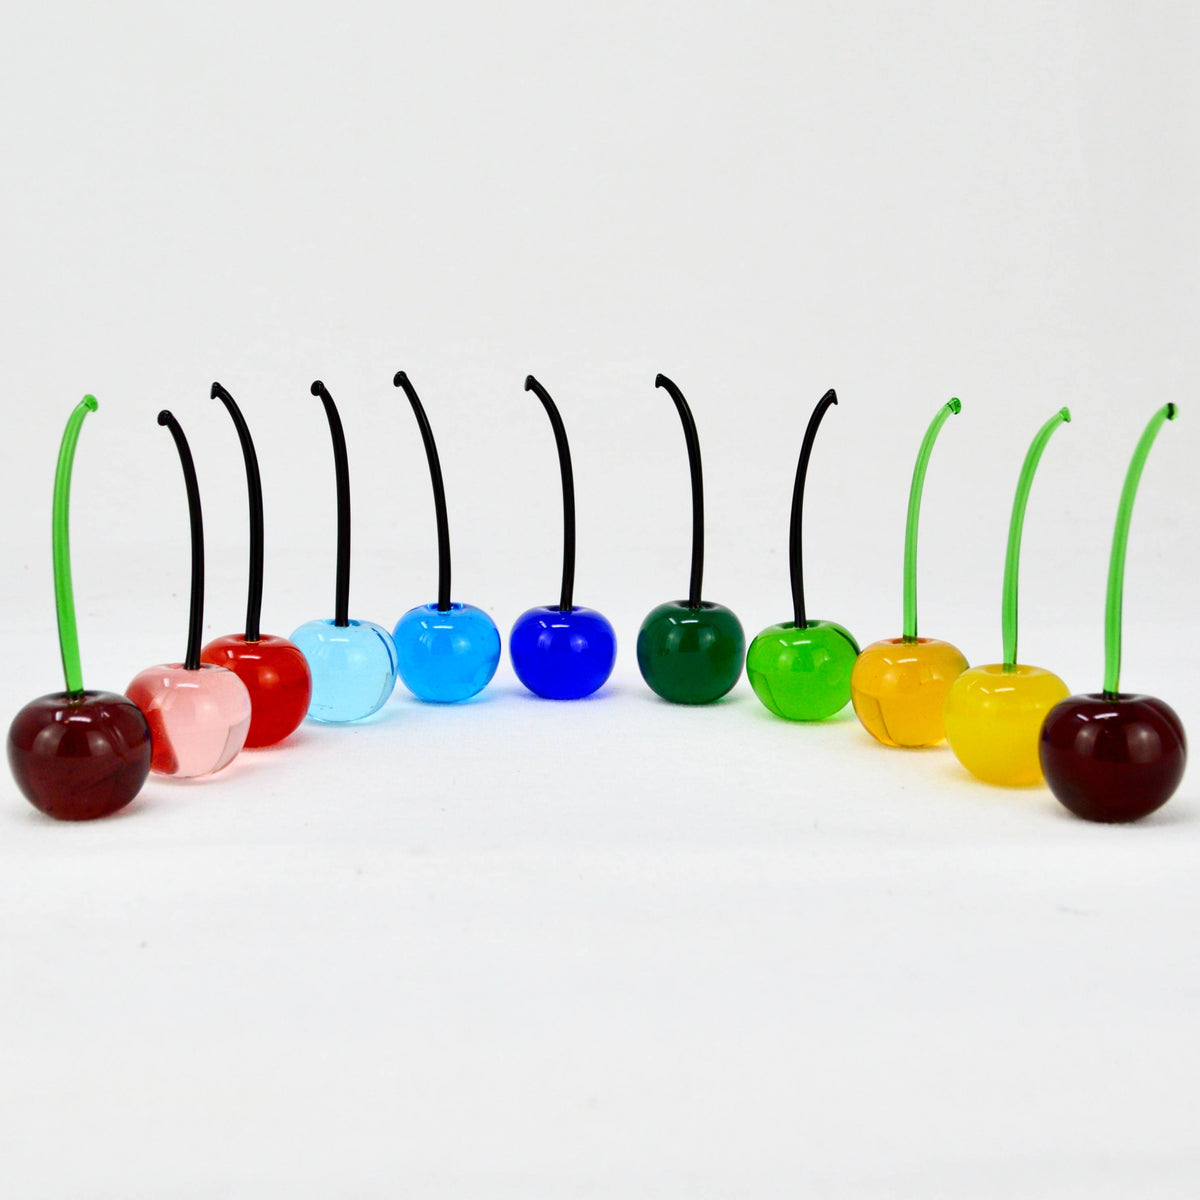 Murano Glass Cherries, Lifelike, Multi-Color, Set of 3, Handmade in Italy - My Italian Decor